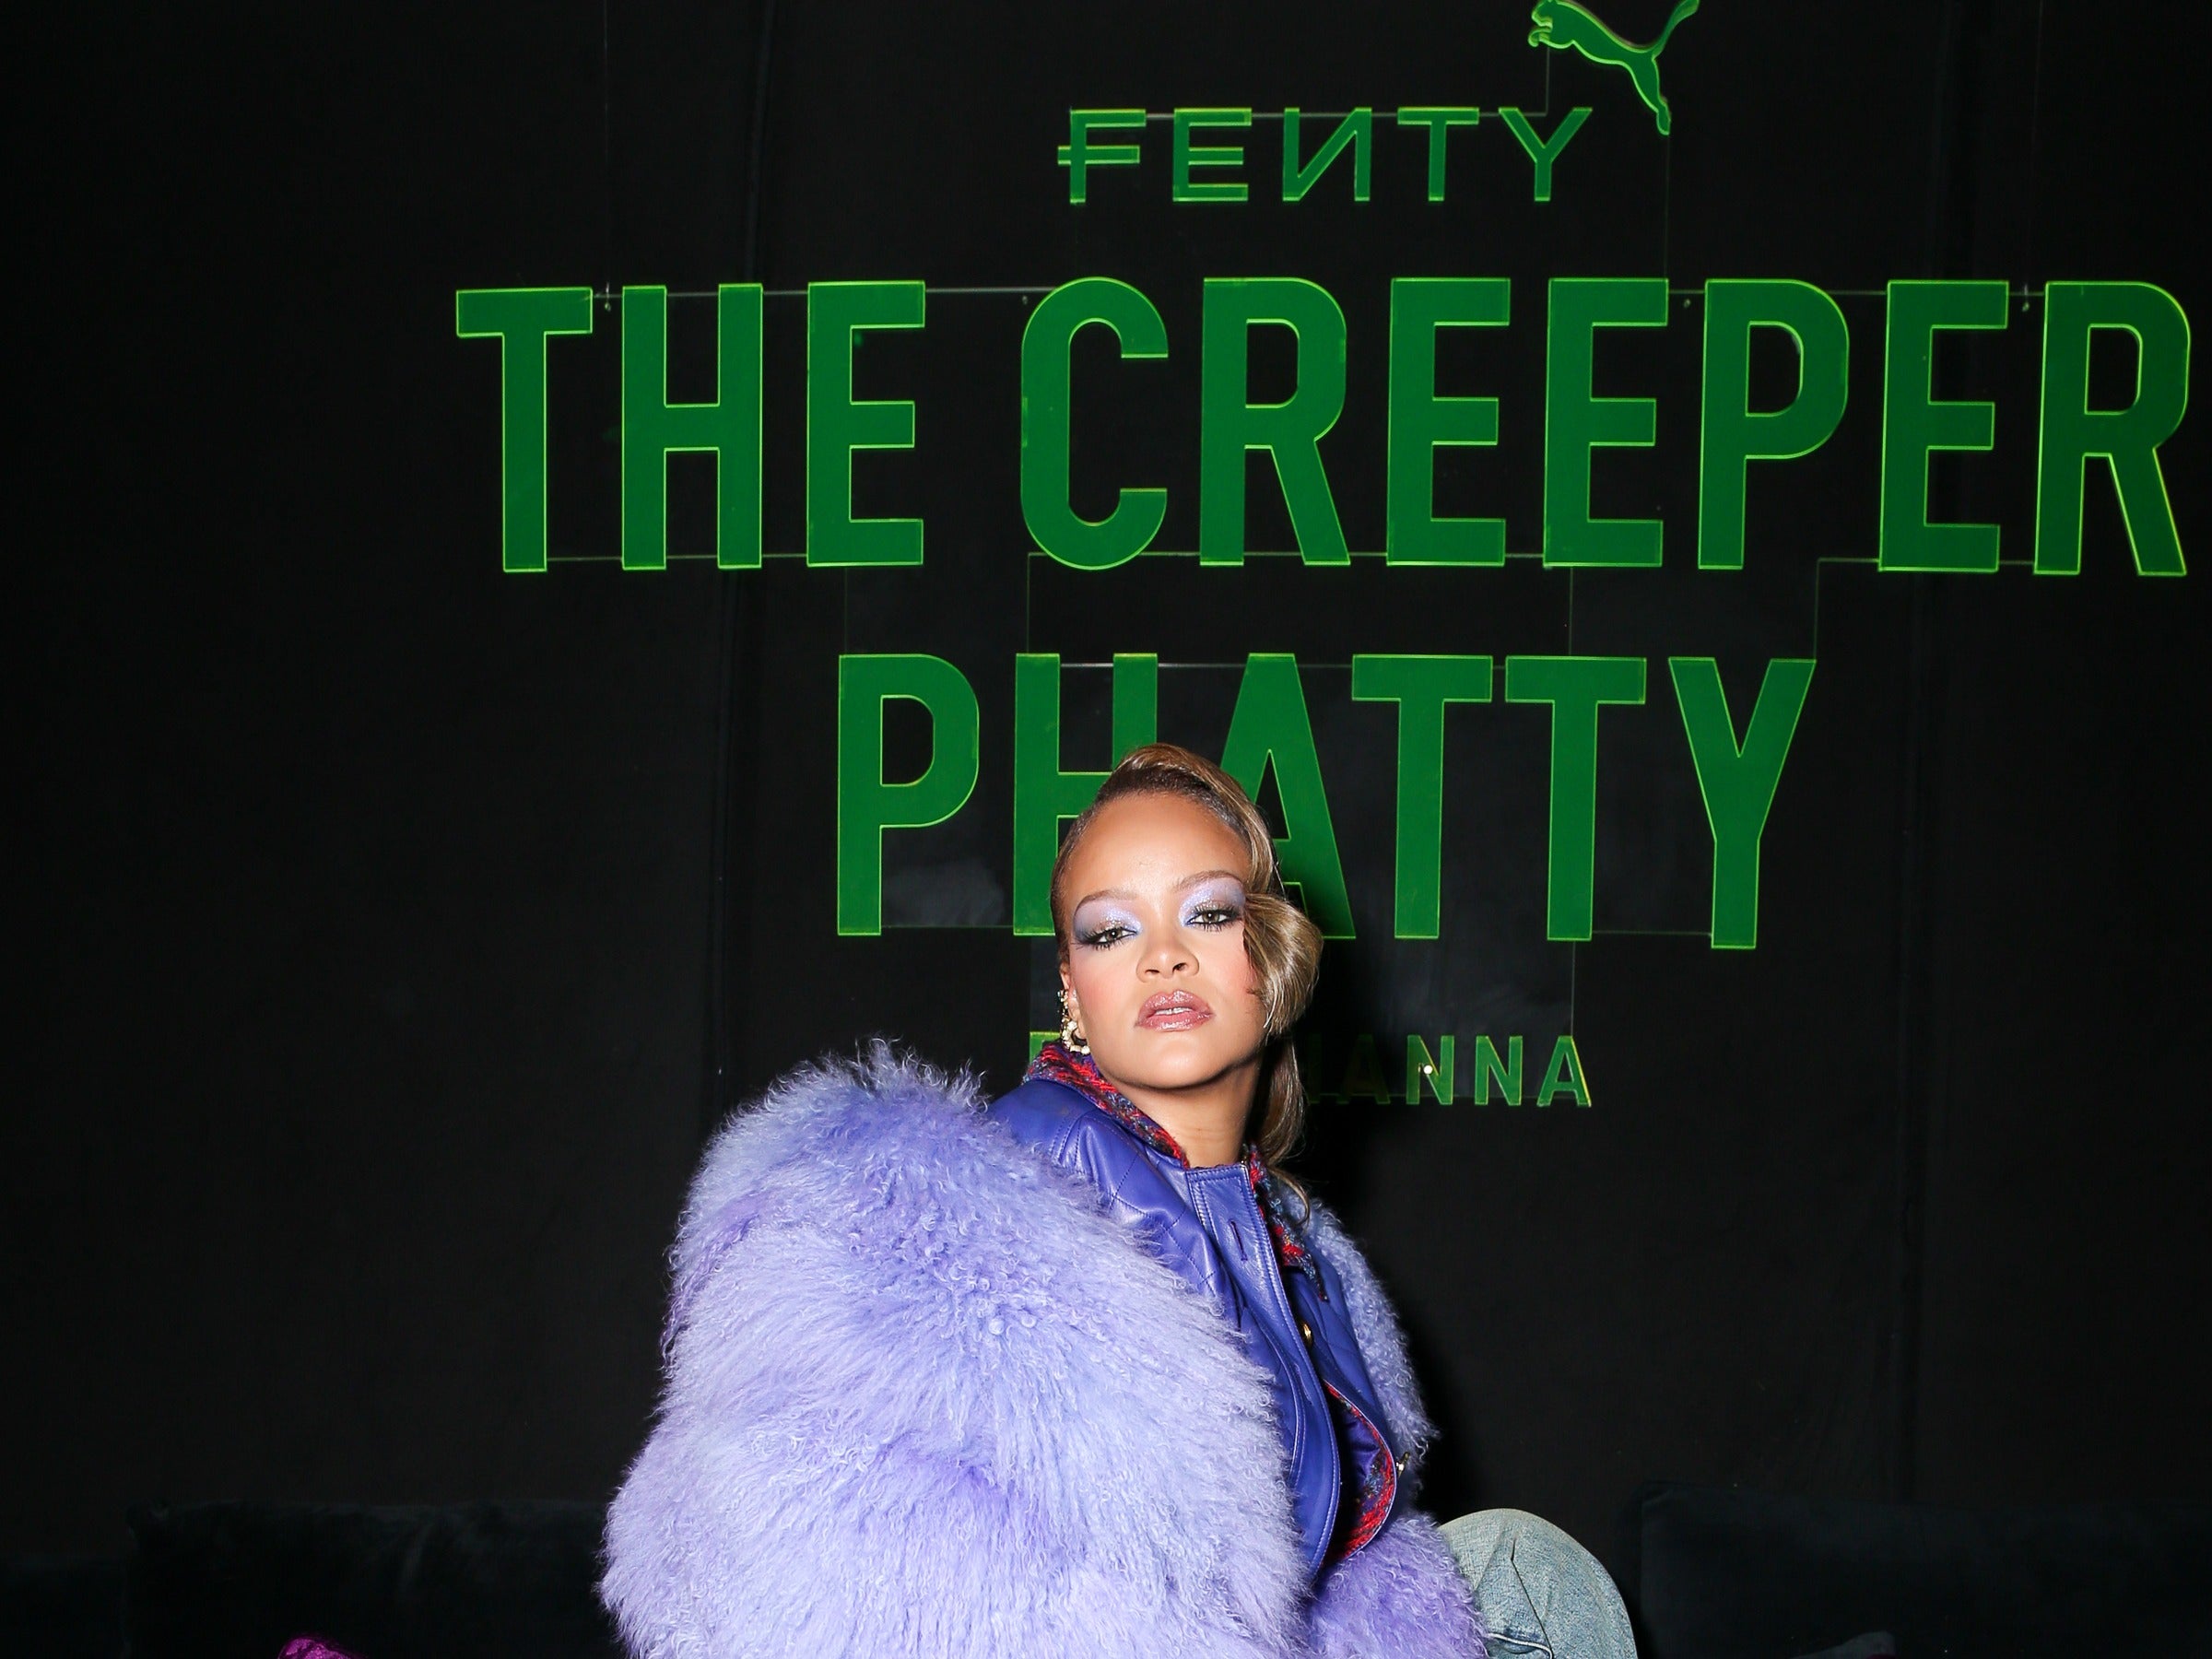 Inside Rihanna And FENTY's Creeper Phatty Launch Party